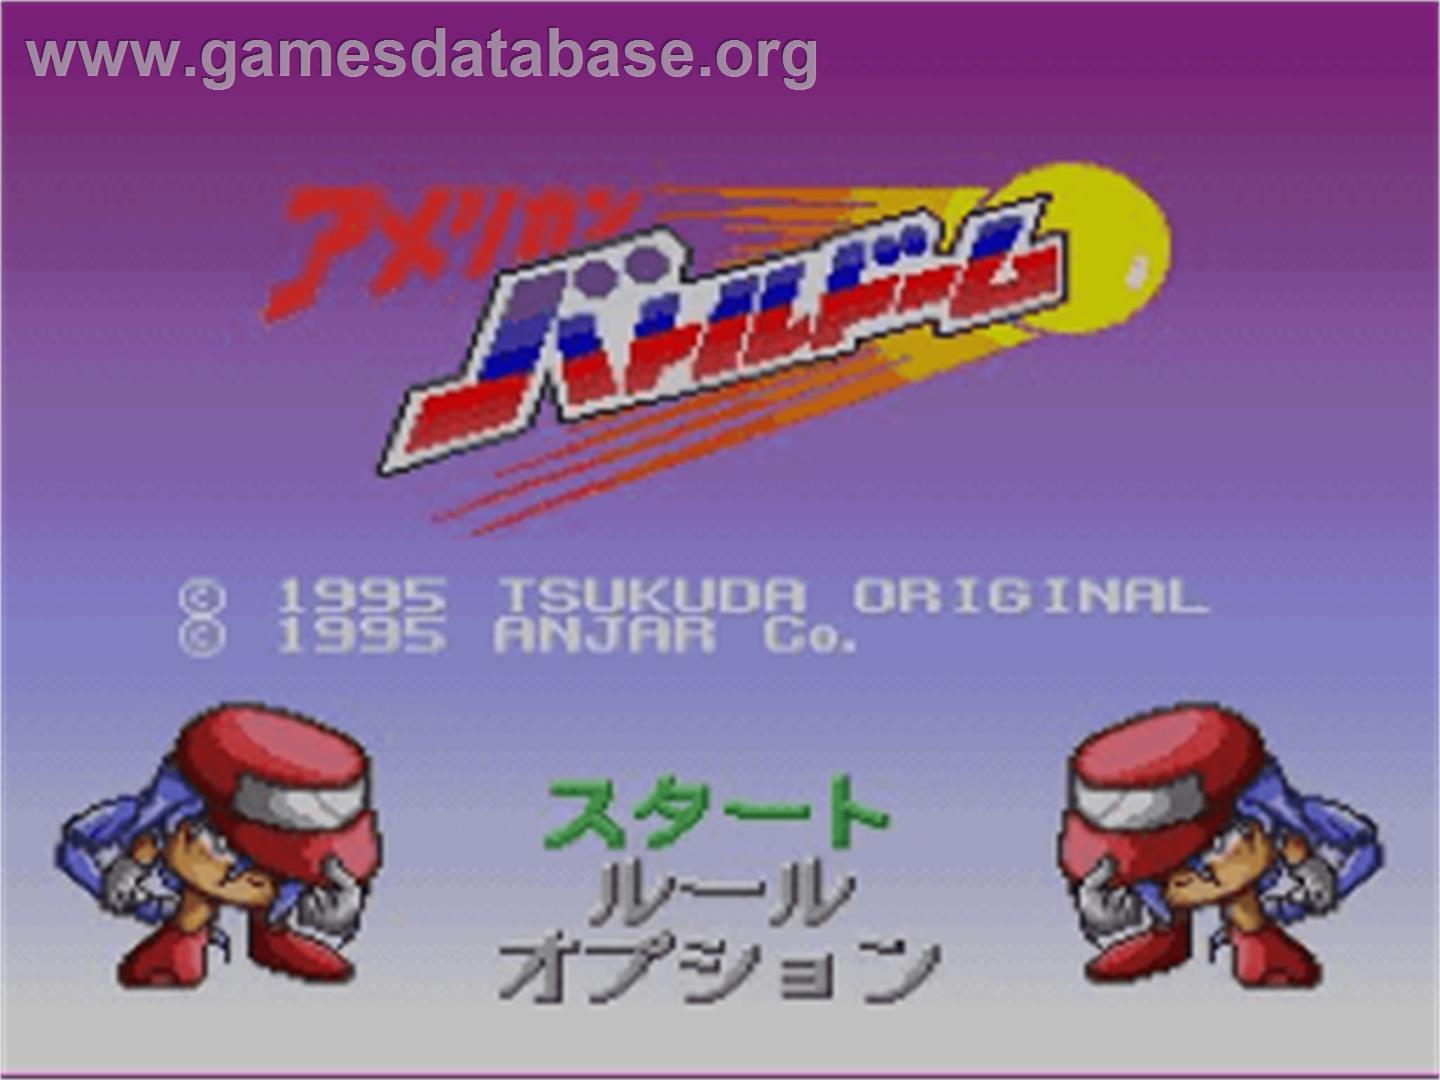 American Battle Dome - Nintendo SNES - Artwork - Title Screen